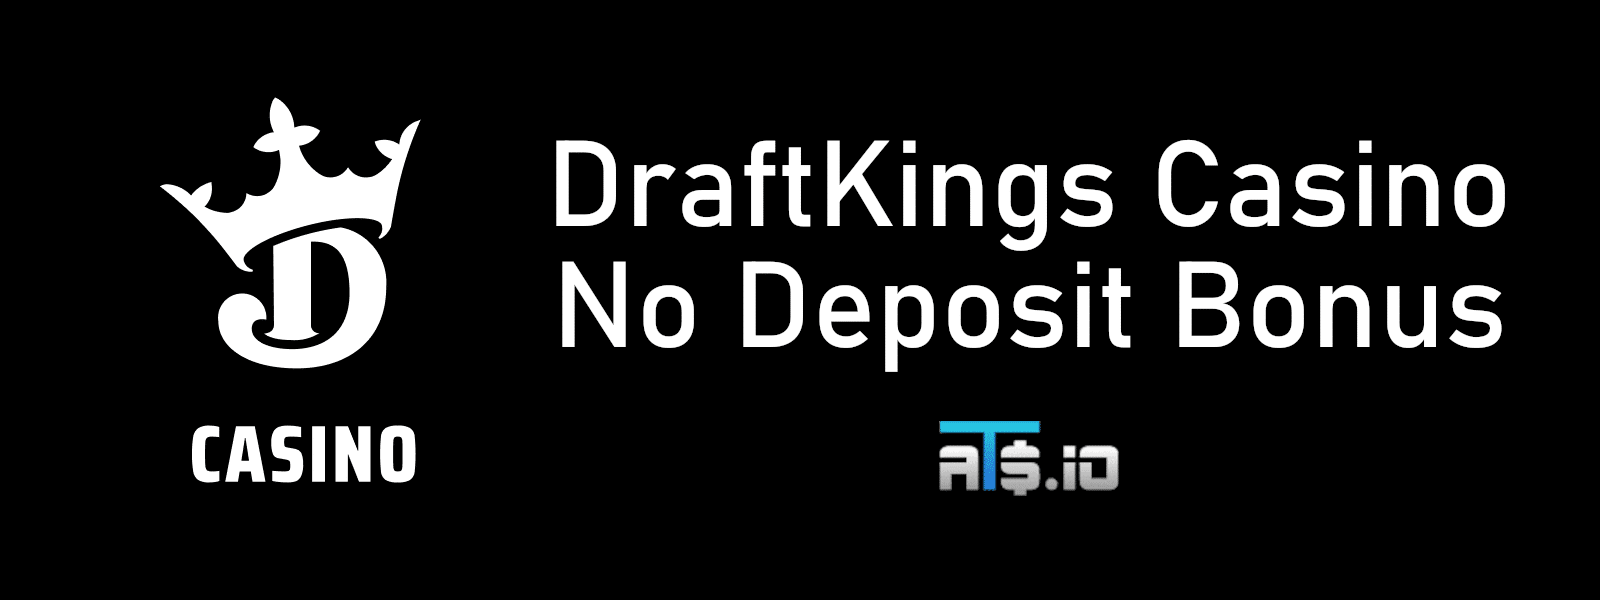 draftkings casino no deposit ats